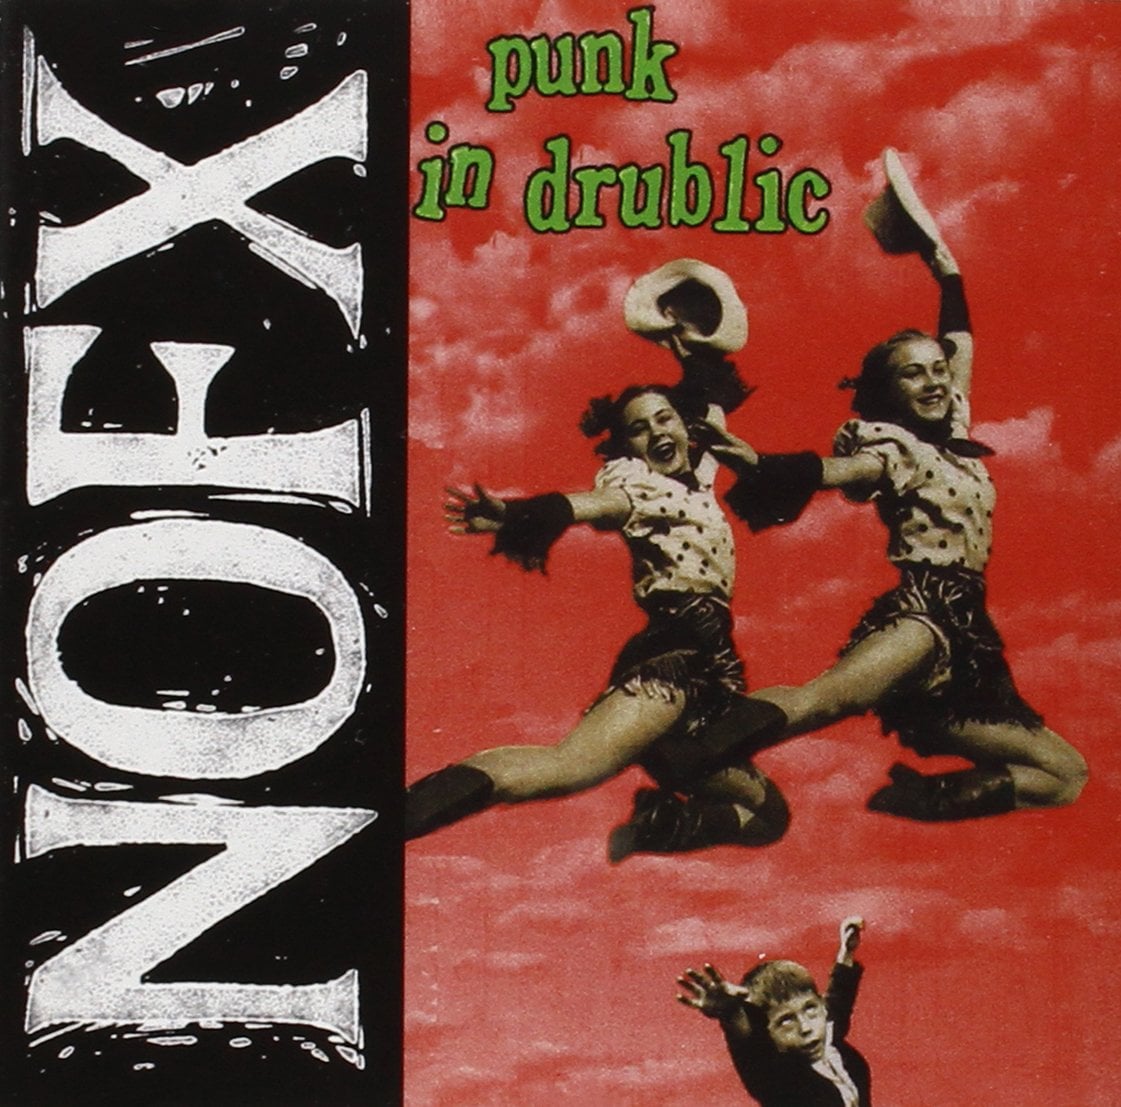 Punk In Drublic